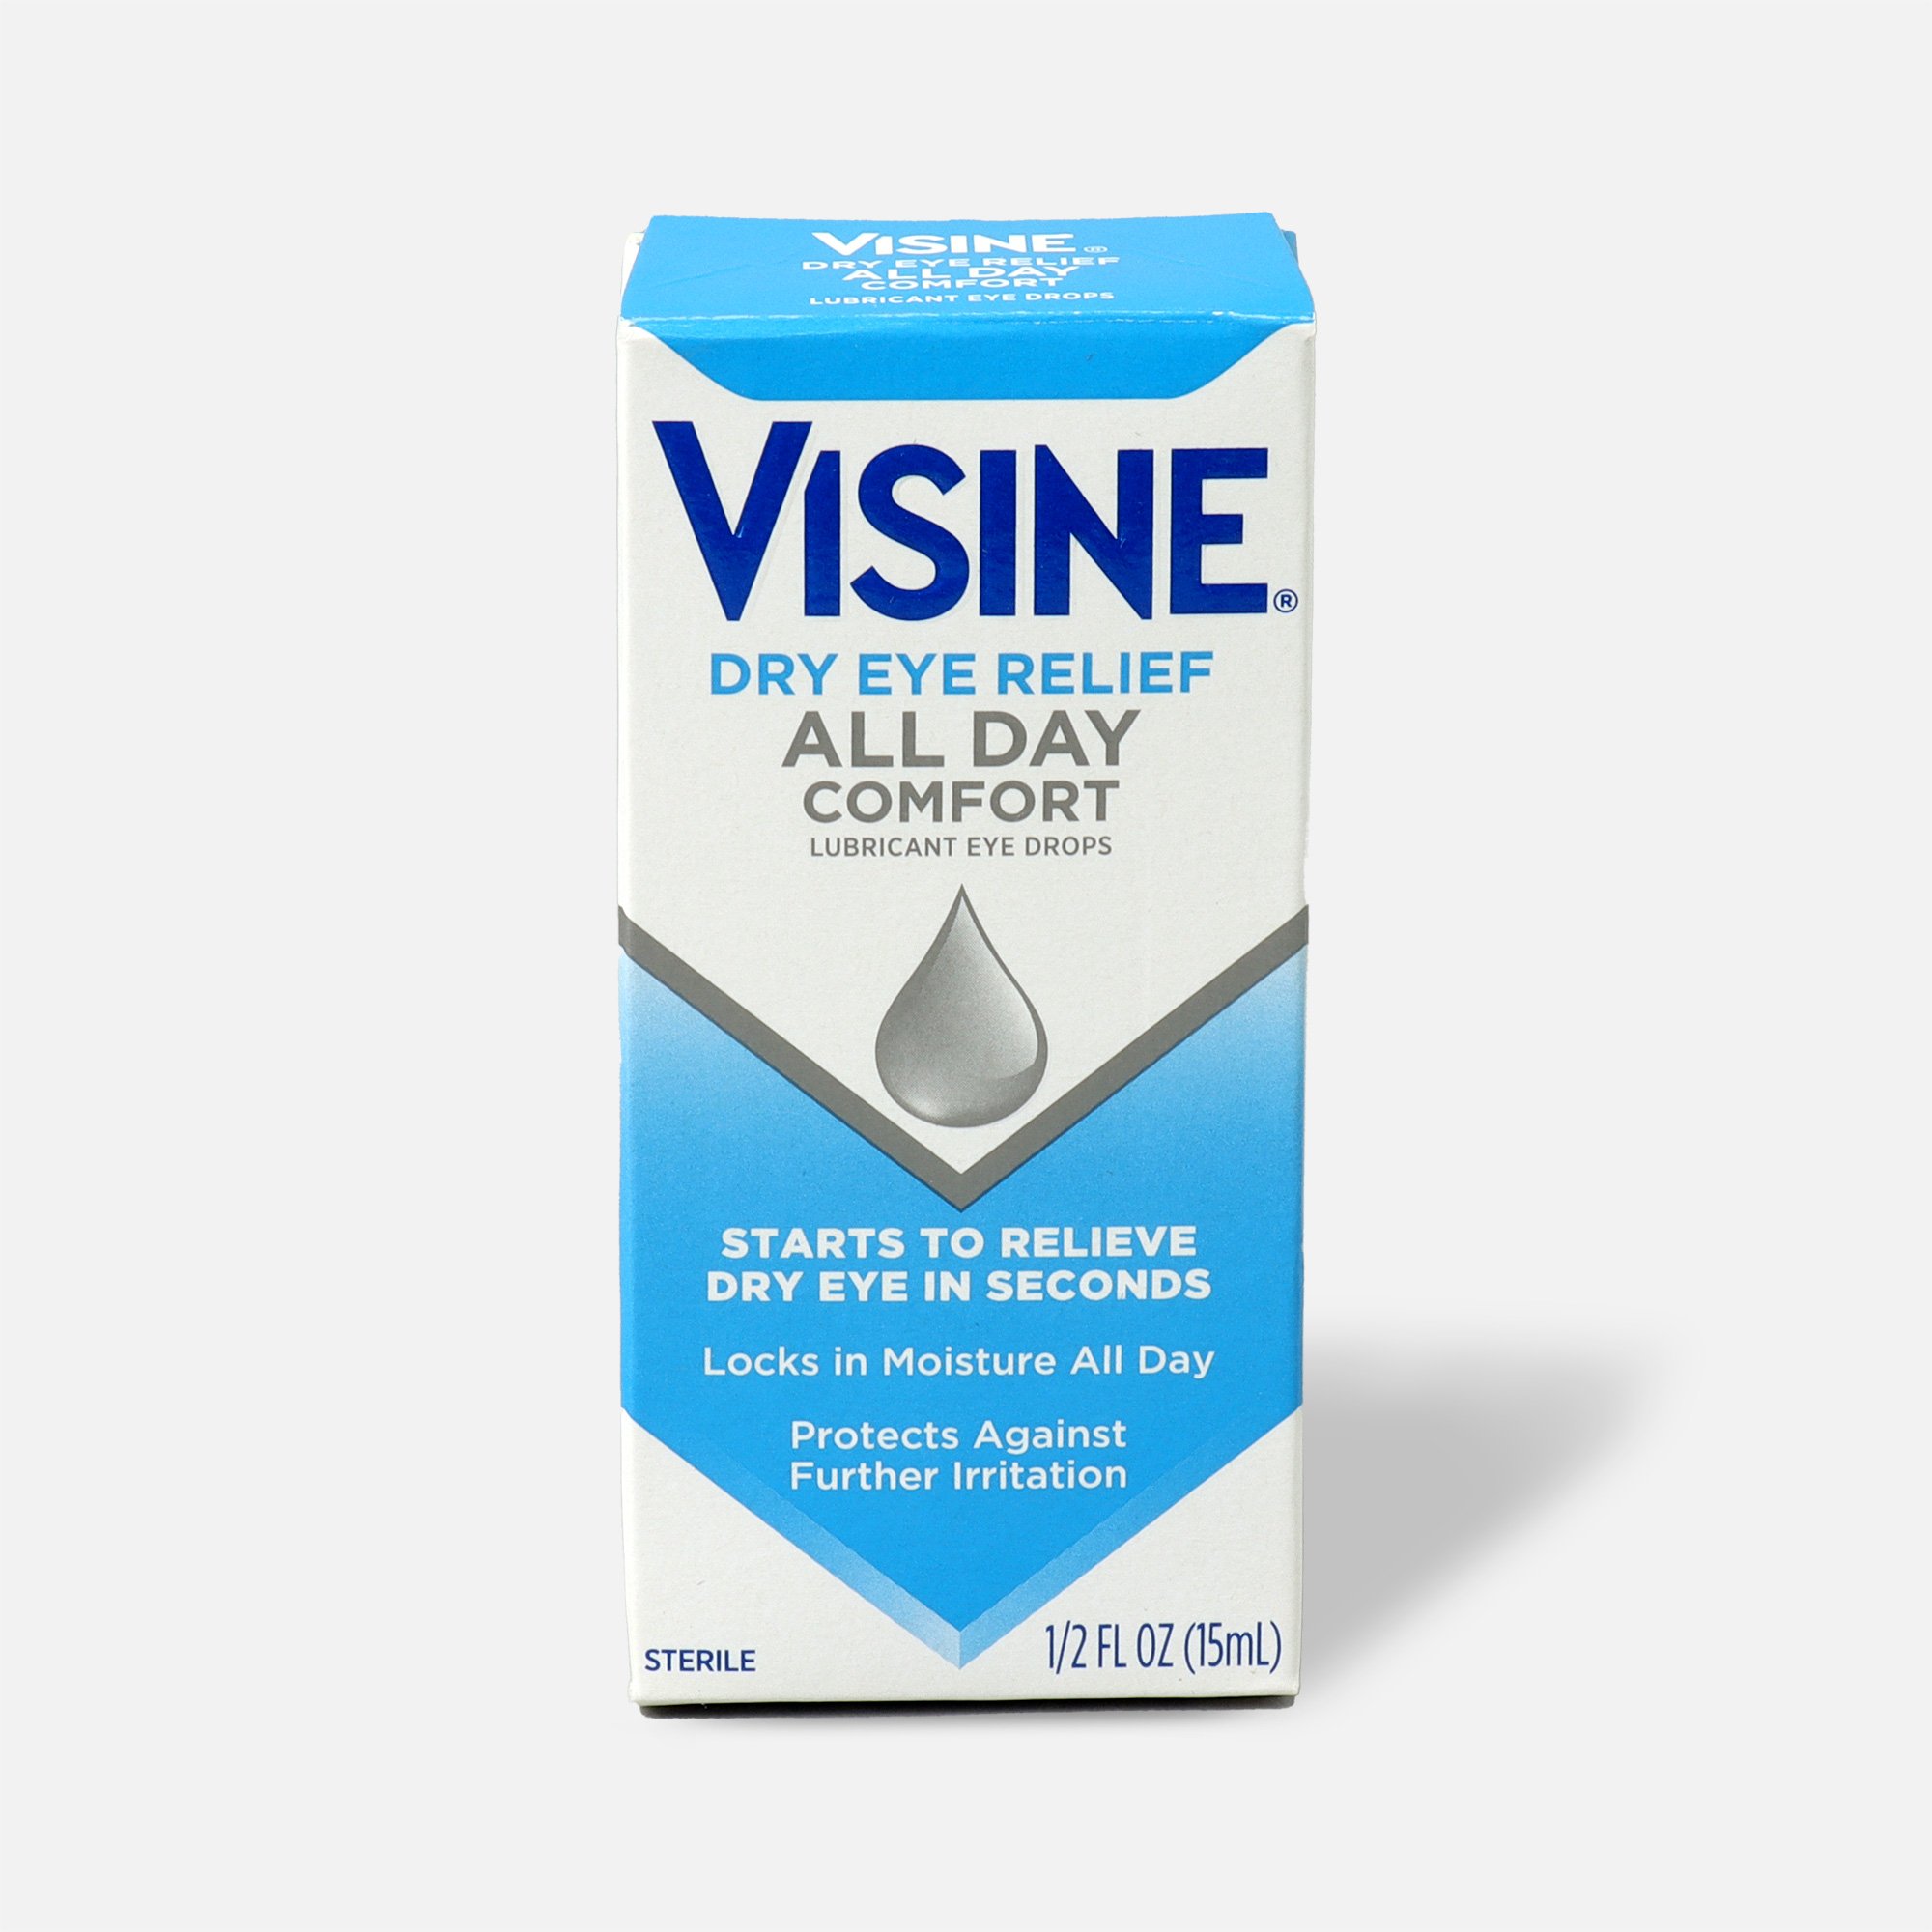 Buy cheap Visine Advanced Relief eye drops